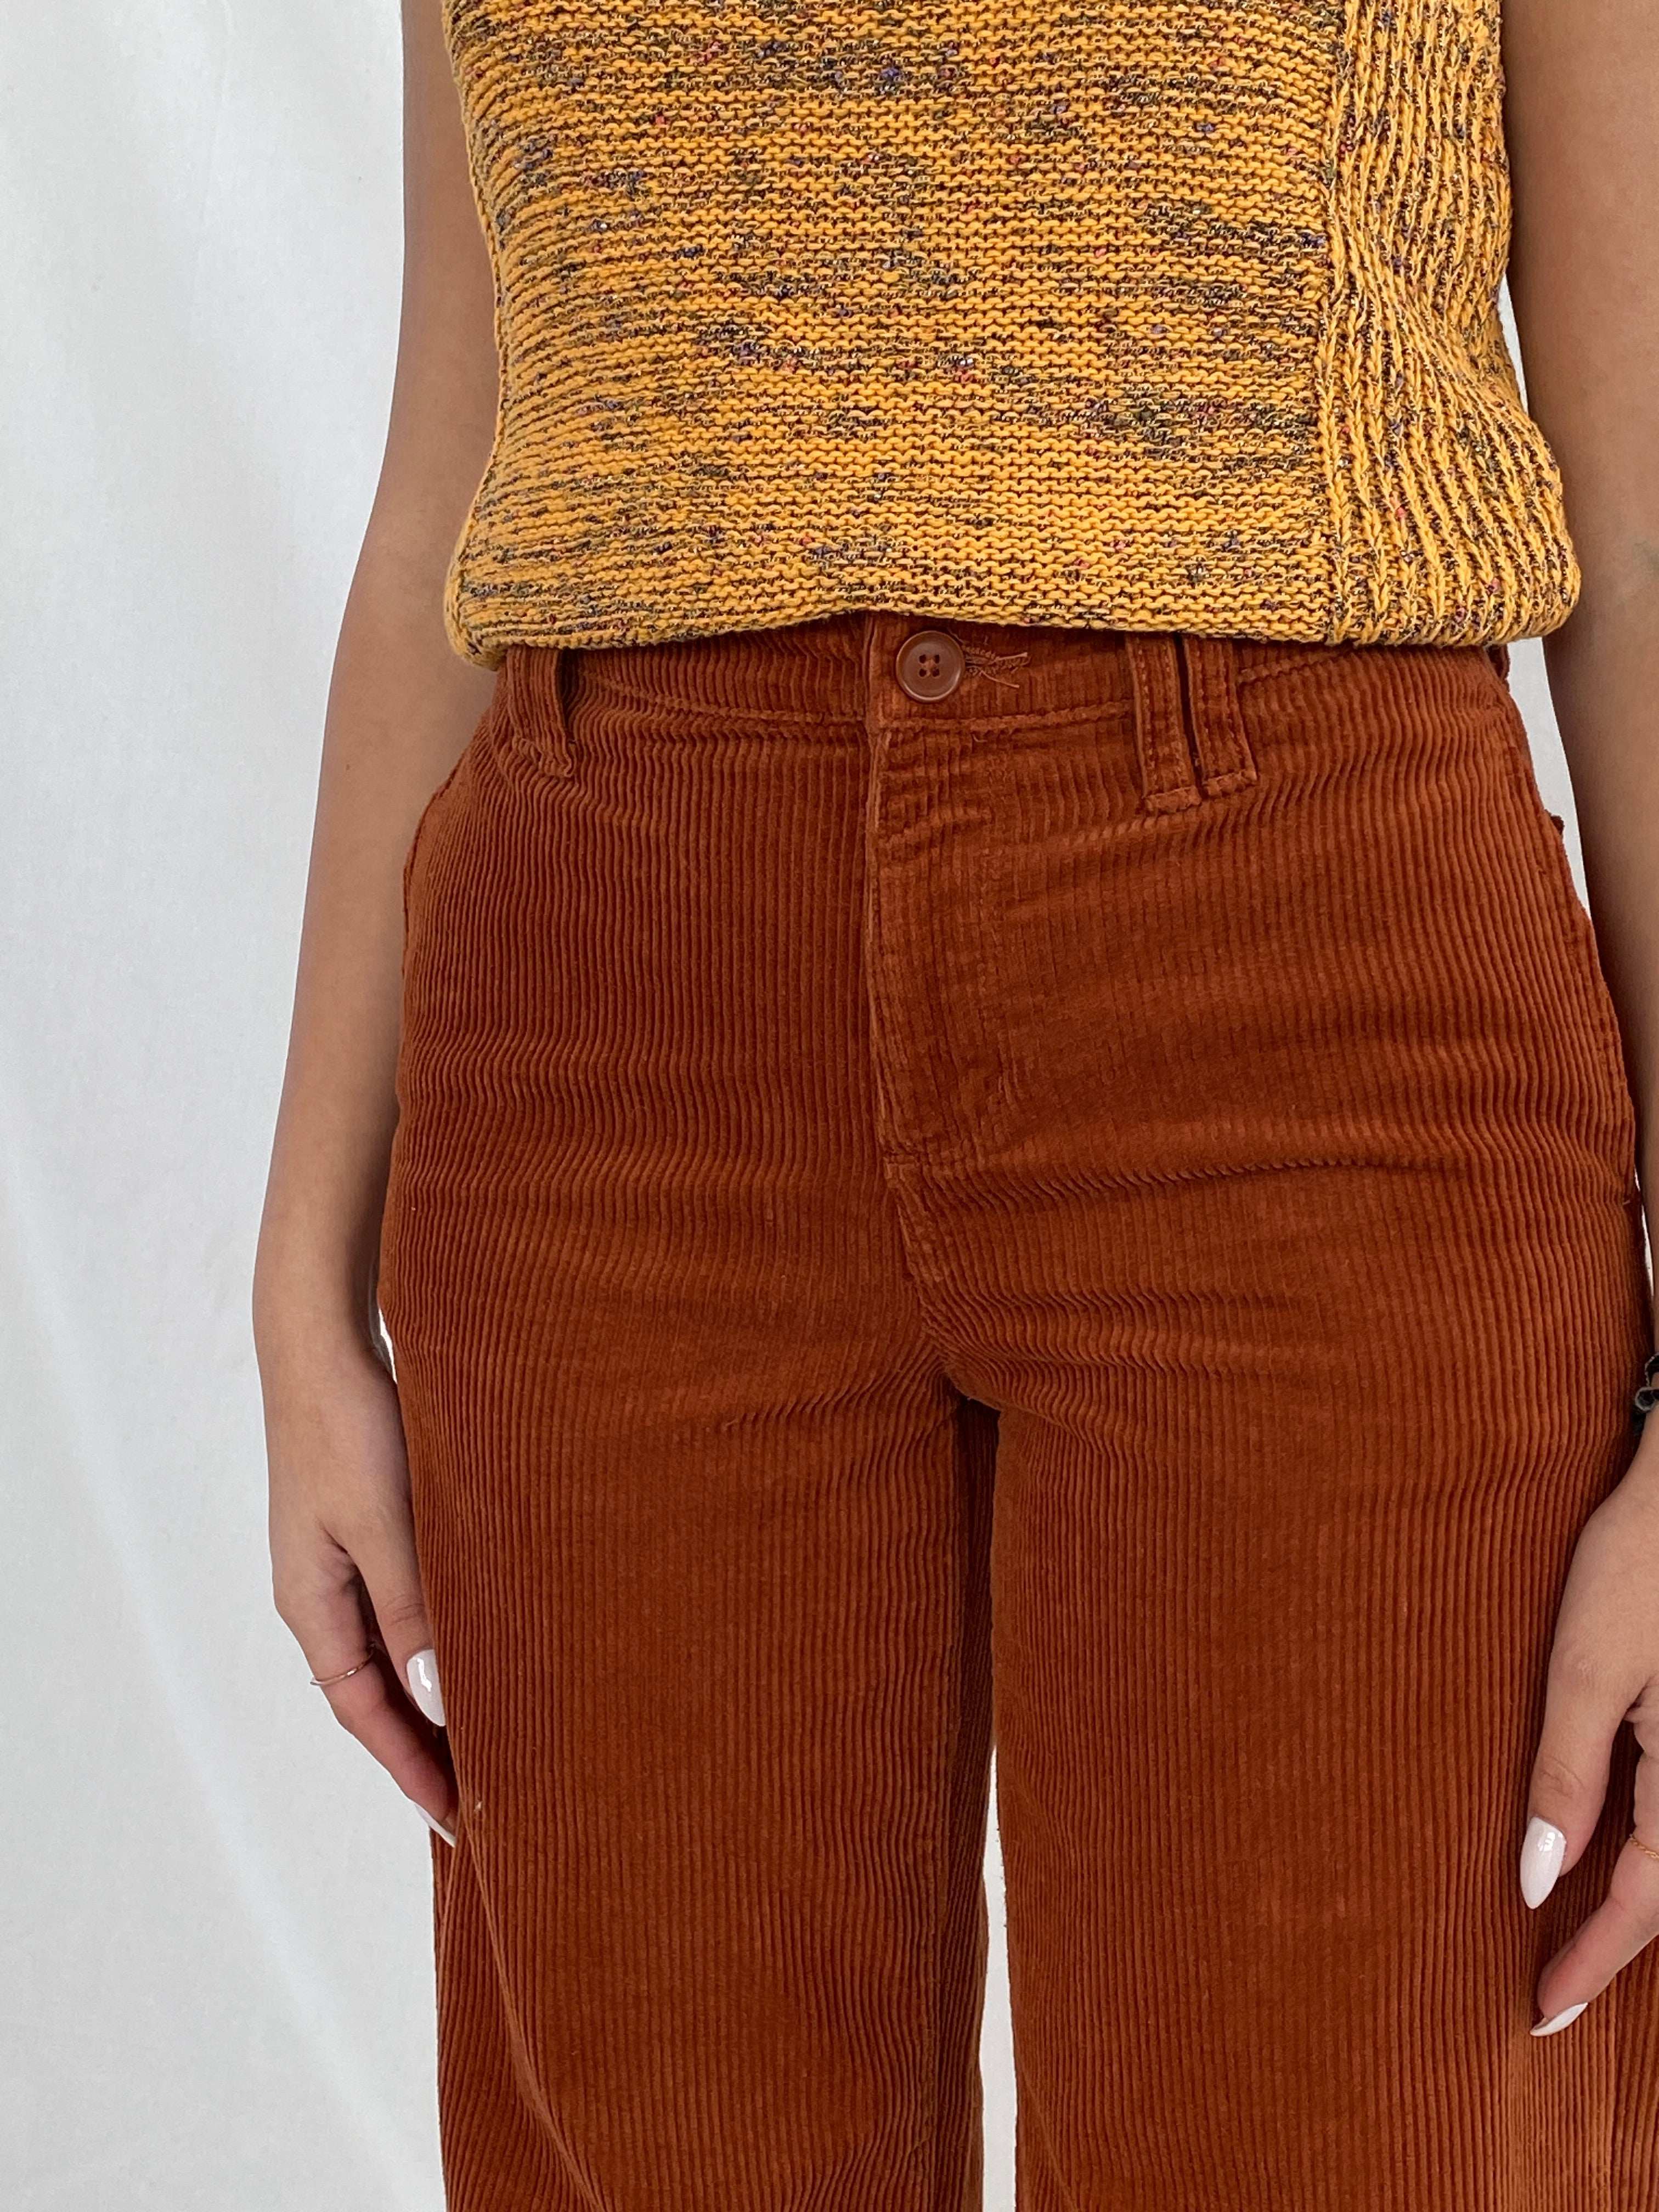 Gorgeous ANA Wide Legged Orange Corduroy Pants - Balagan Vintage Corduroy Pants 00s, corduroy, corduroy pants, Juana, NEW IN